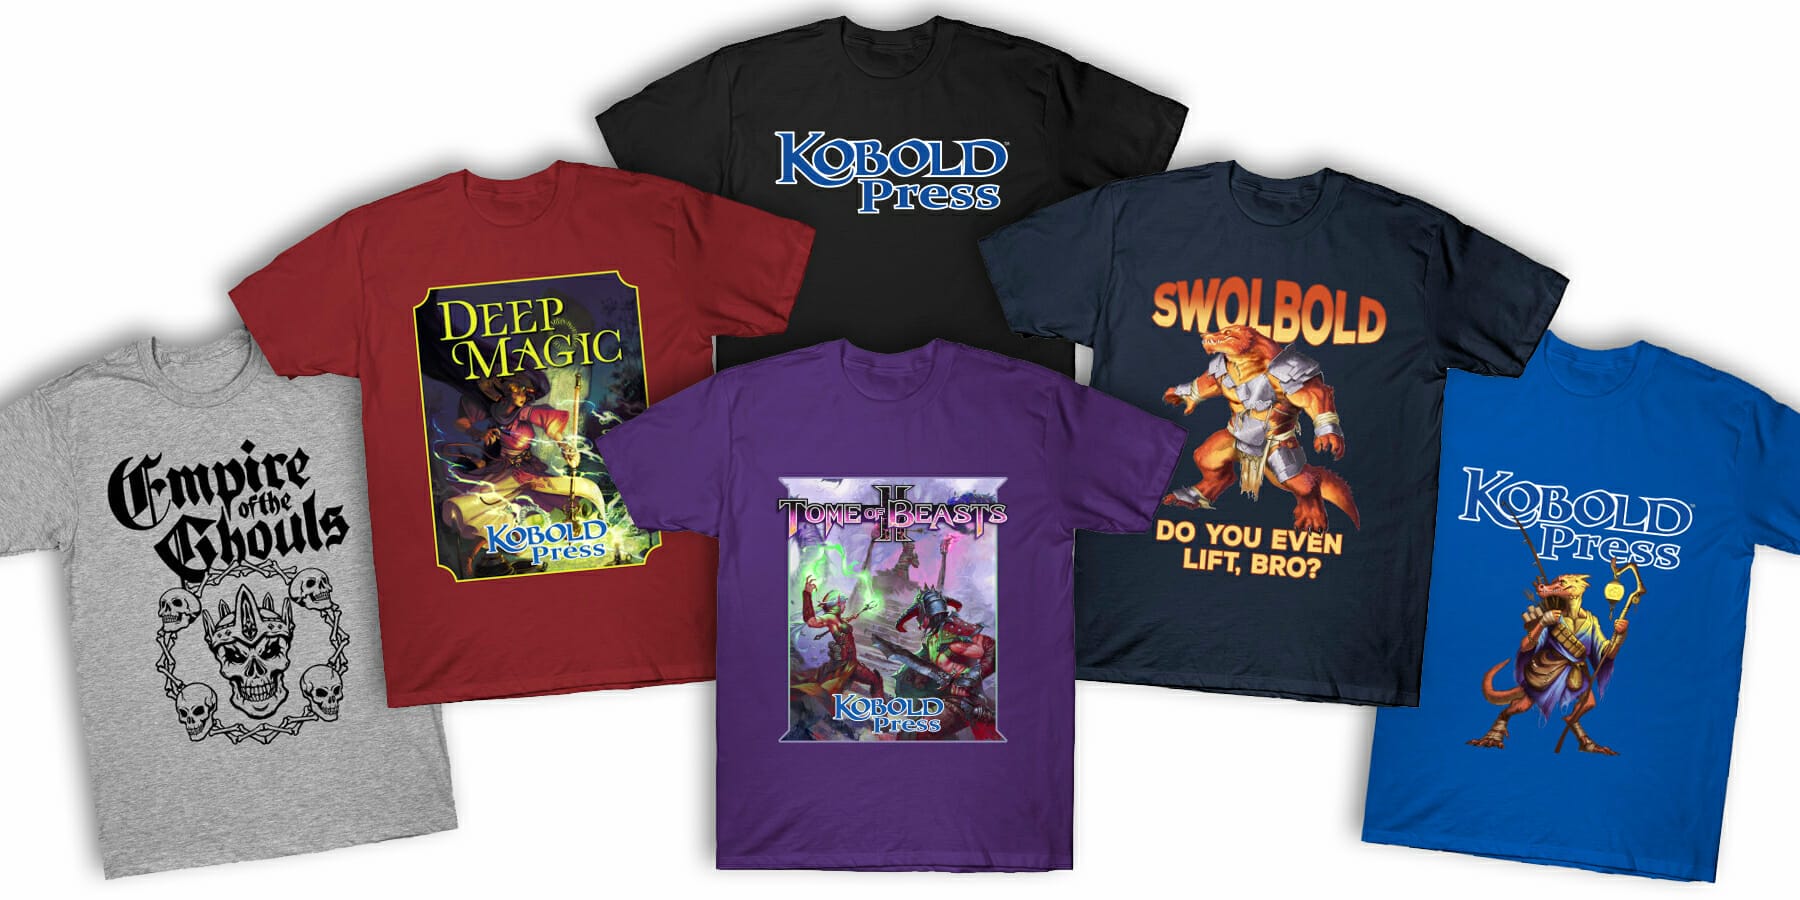 Kobold Press t-shirts